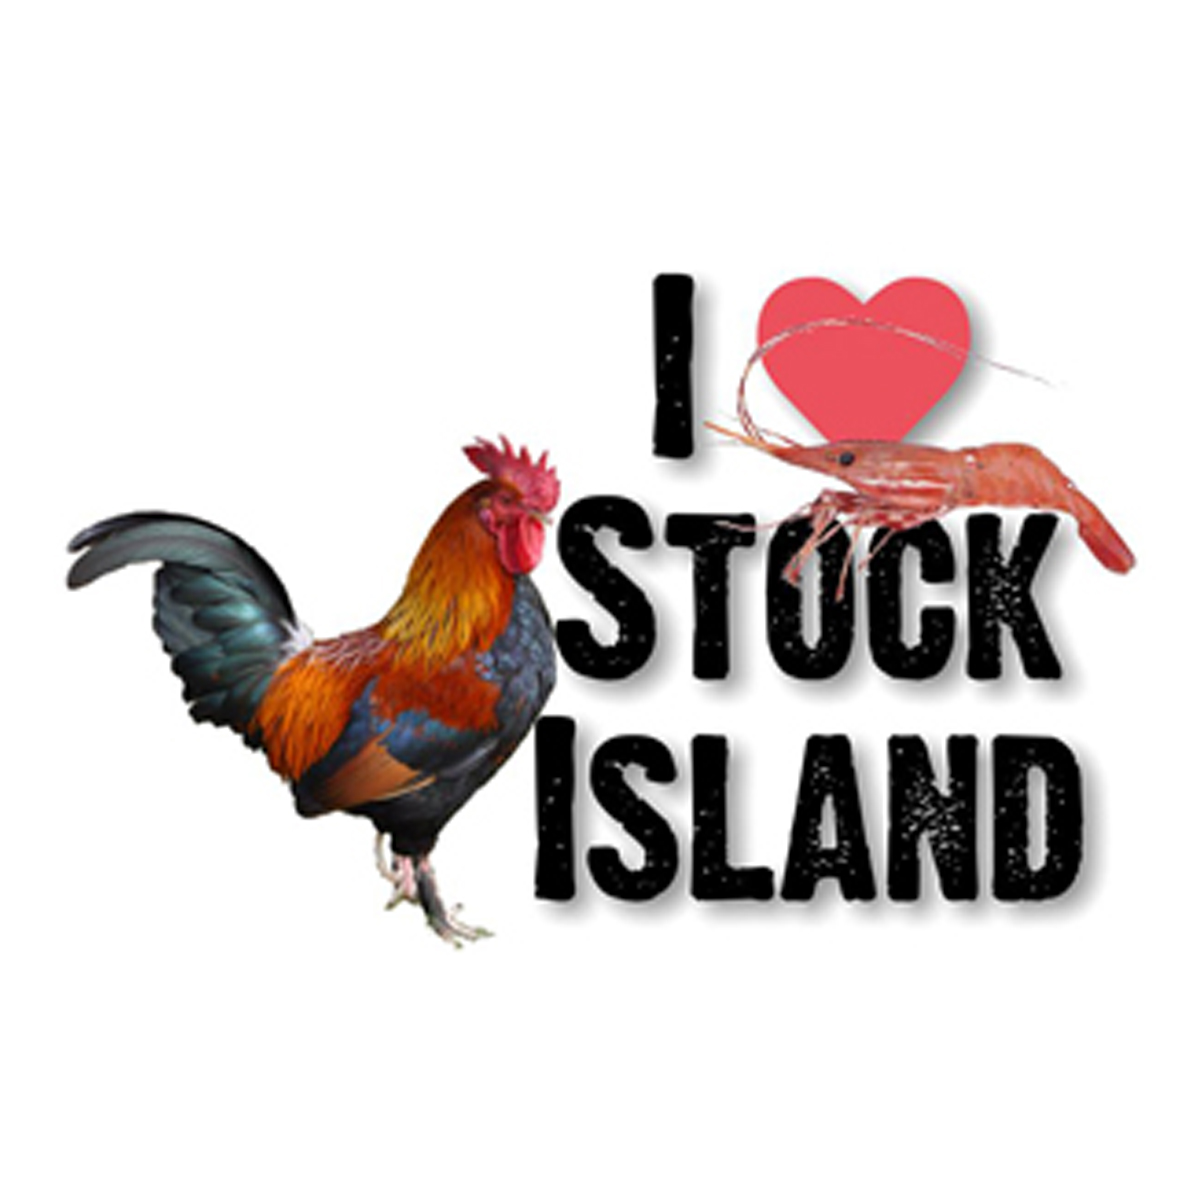 I LOVE STOCK ISLAND